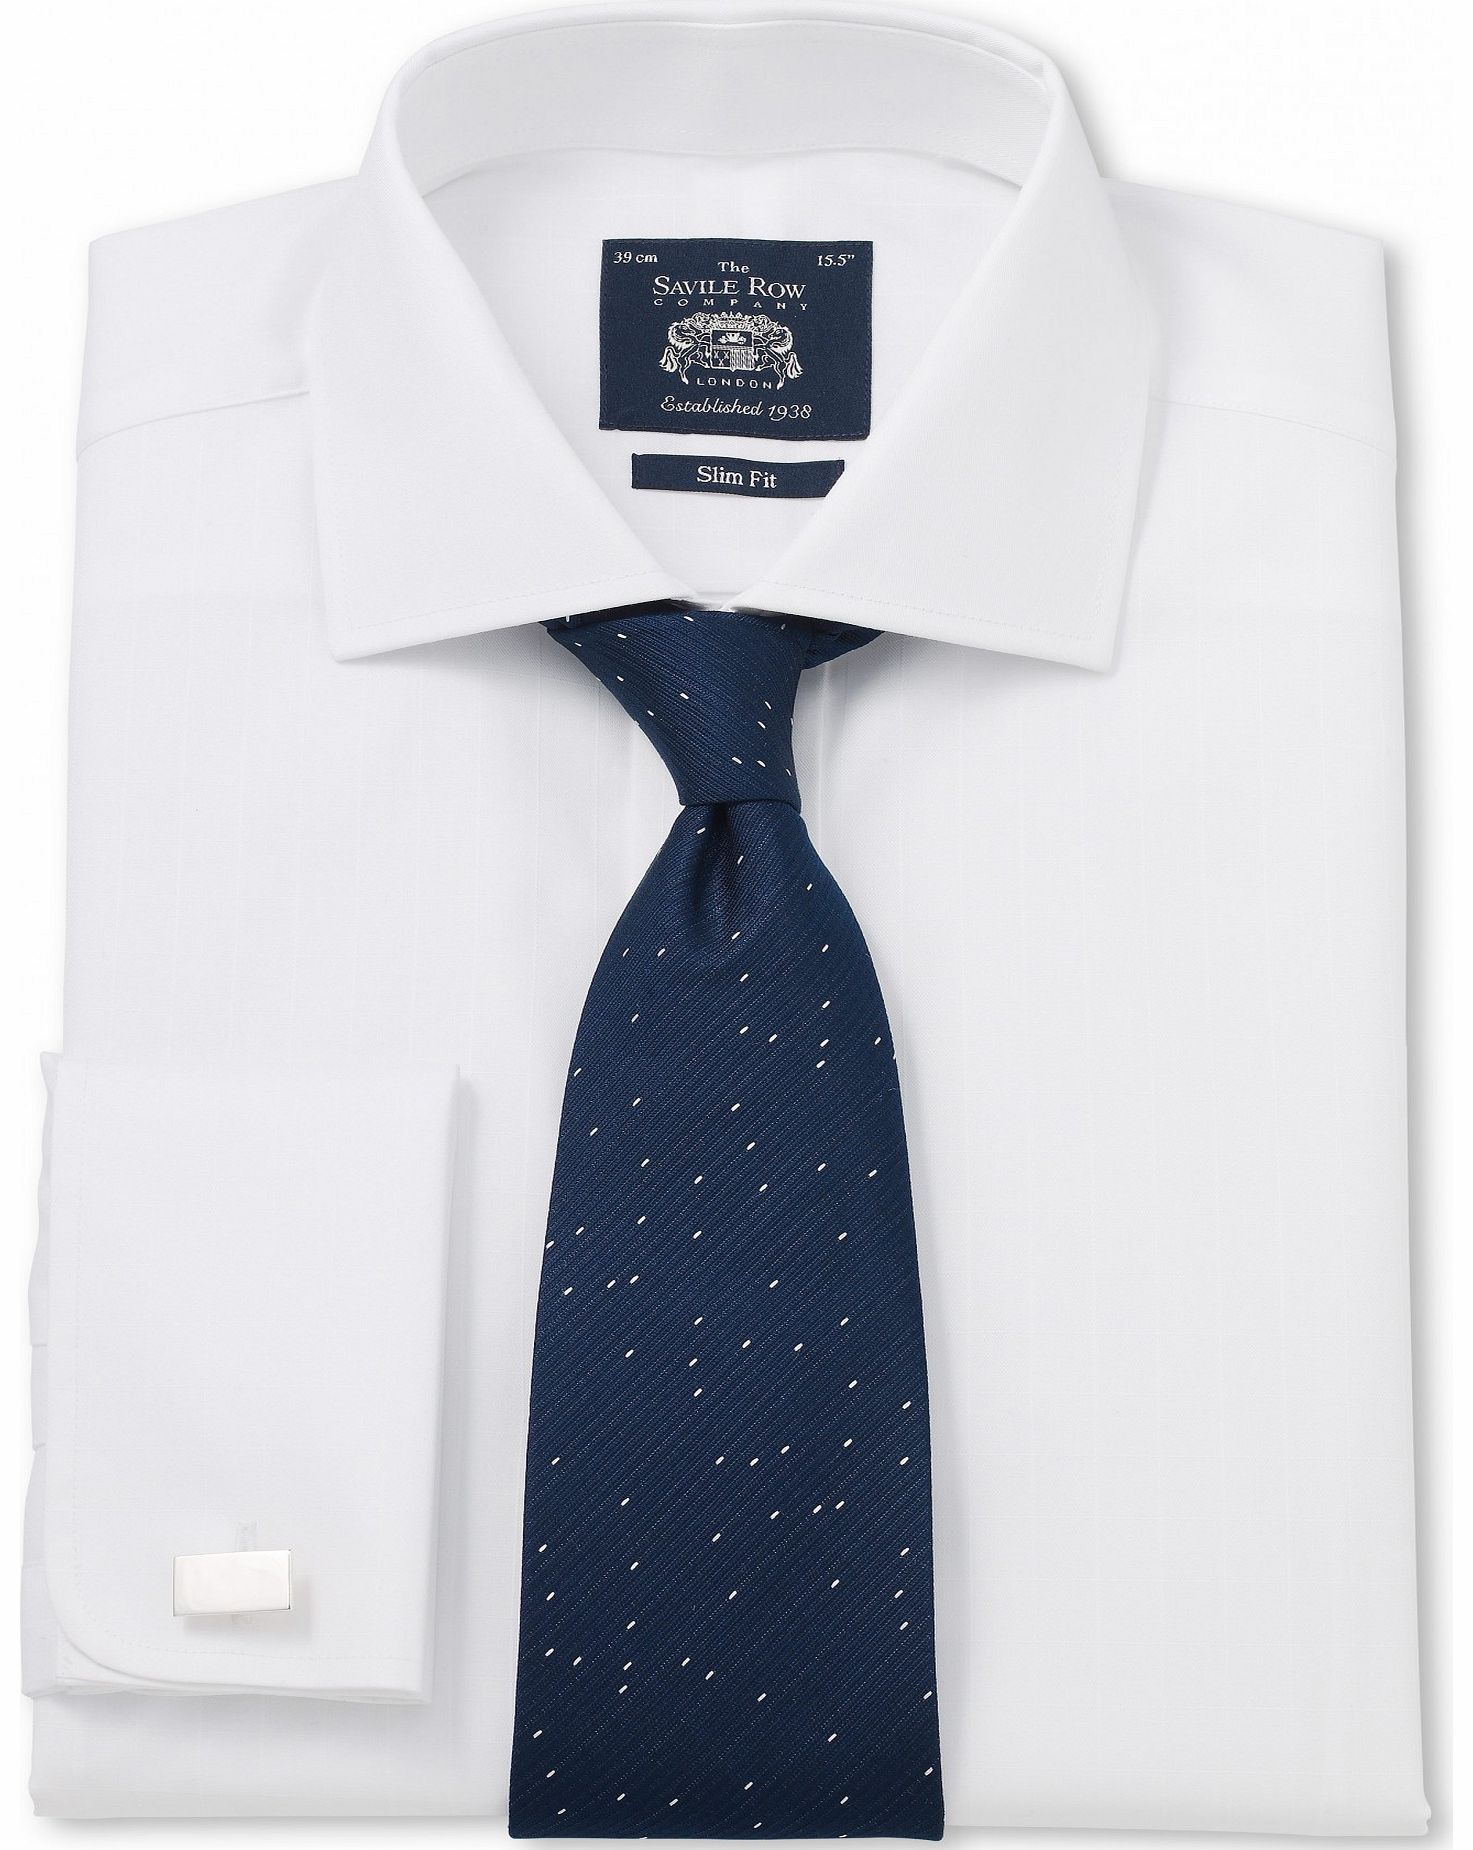 Savile Row Company White Poplin Check Slim Fit Shirt 15`` Double